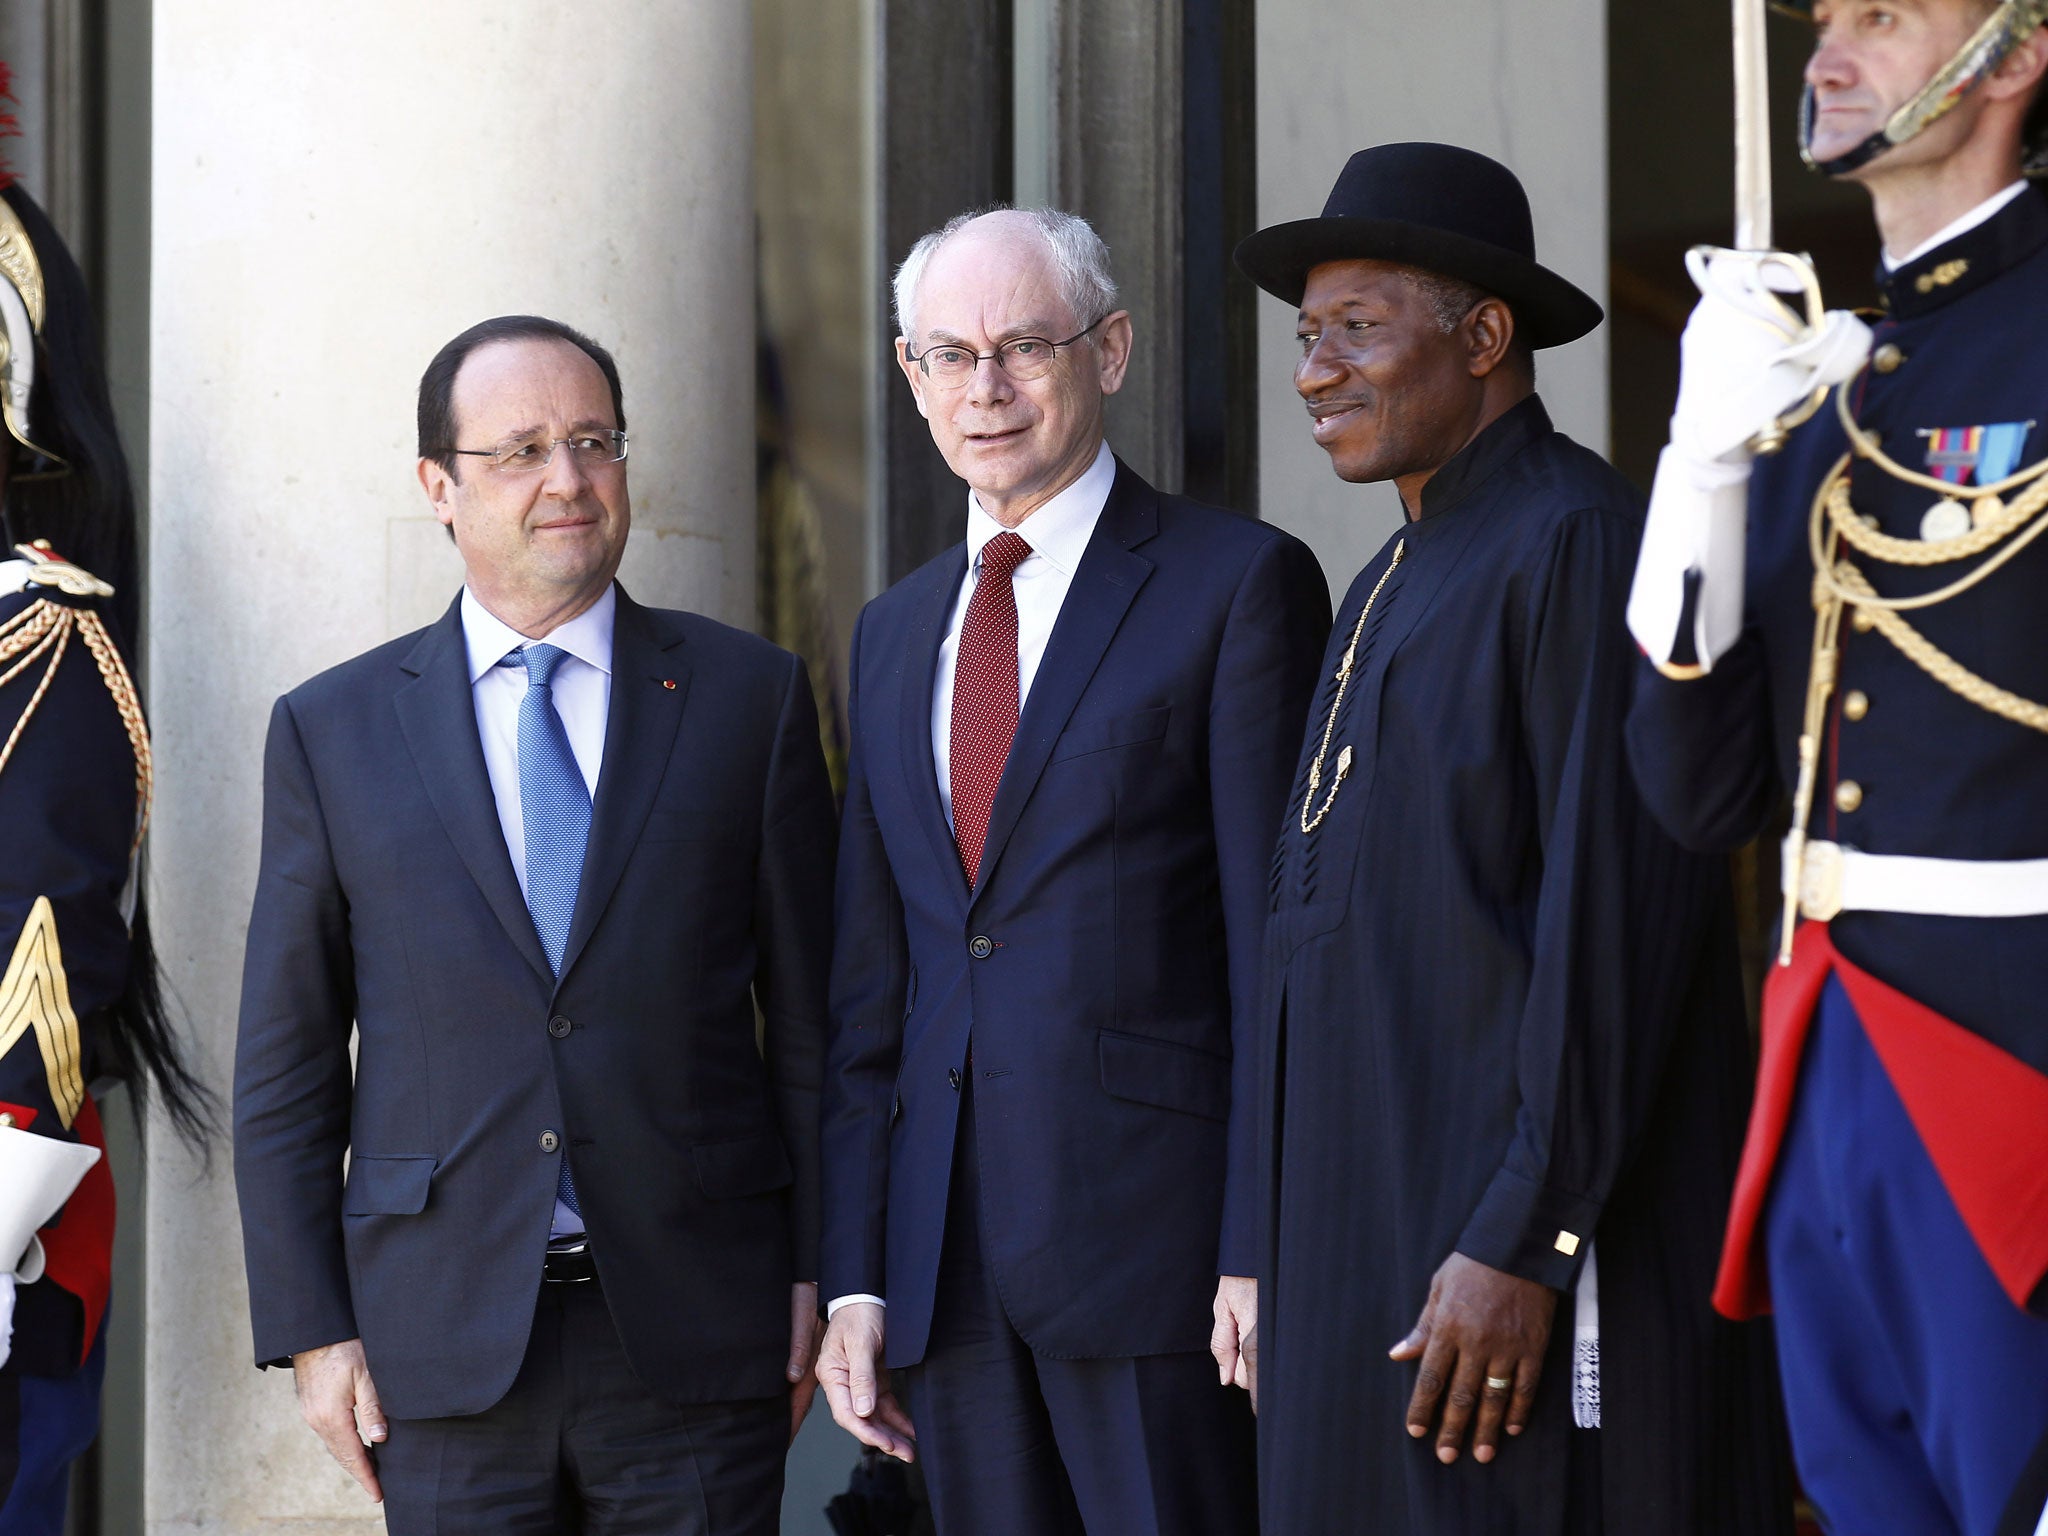 François Hollande, left, and Goodluck Jonathan, right